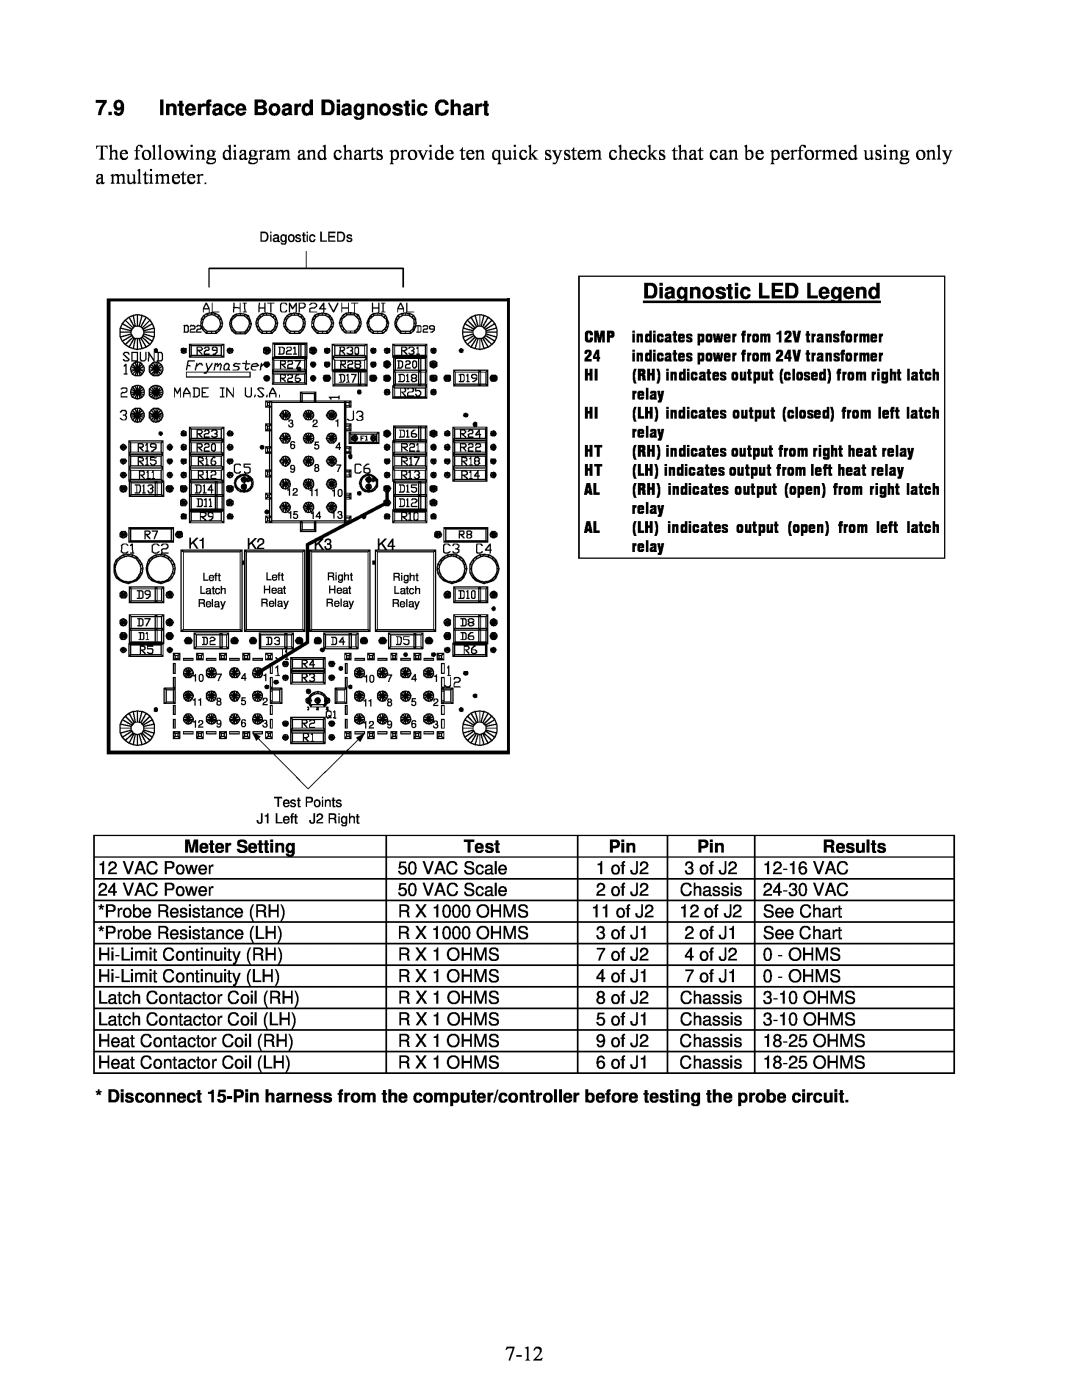 Frymaster H17SC, H22SC, H14SC manual Interface Board Diagnostic Chart, Diagnostic LED Legend, Meter Setting, Test, Results 